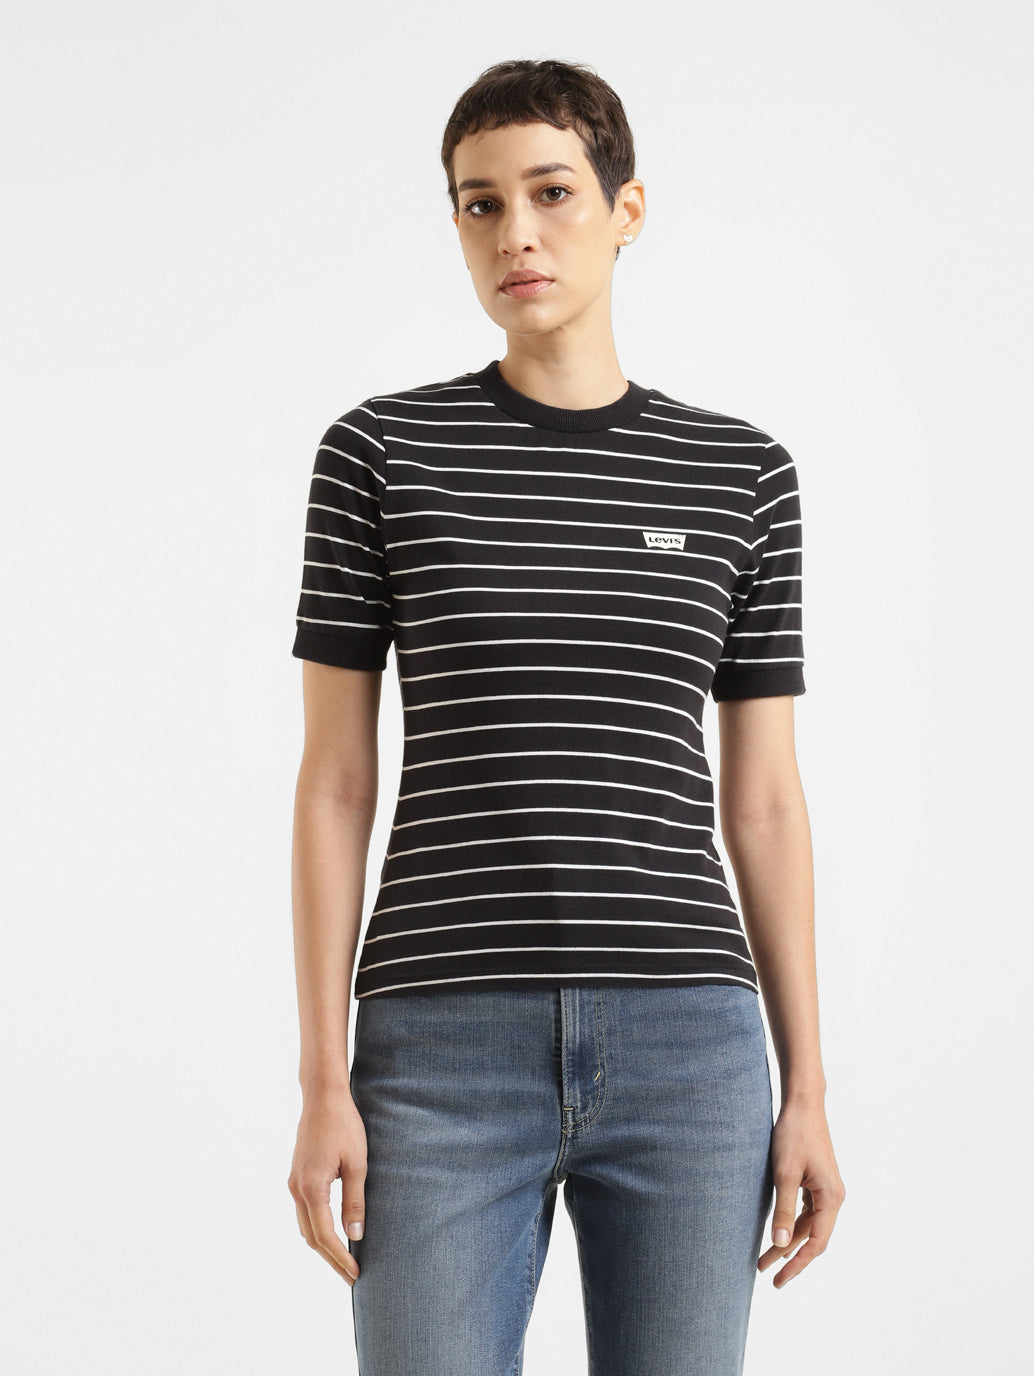 Men's Striped Slim Fit T-shirt